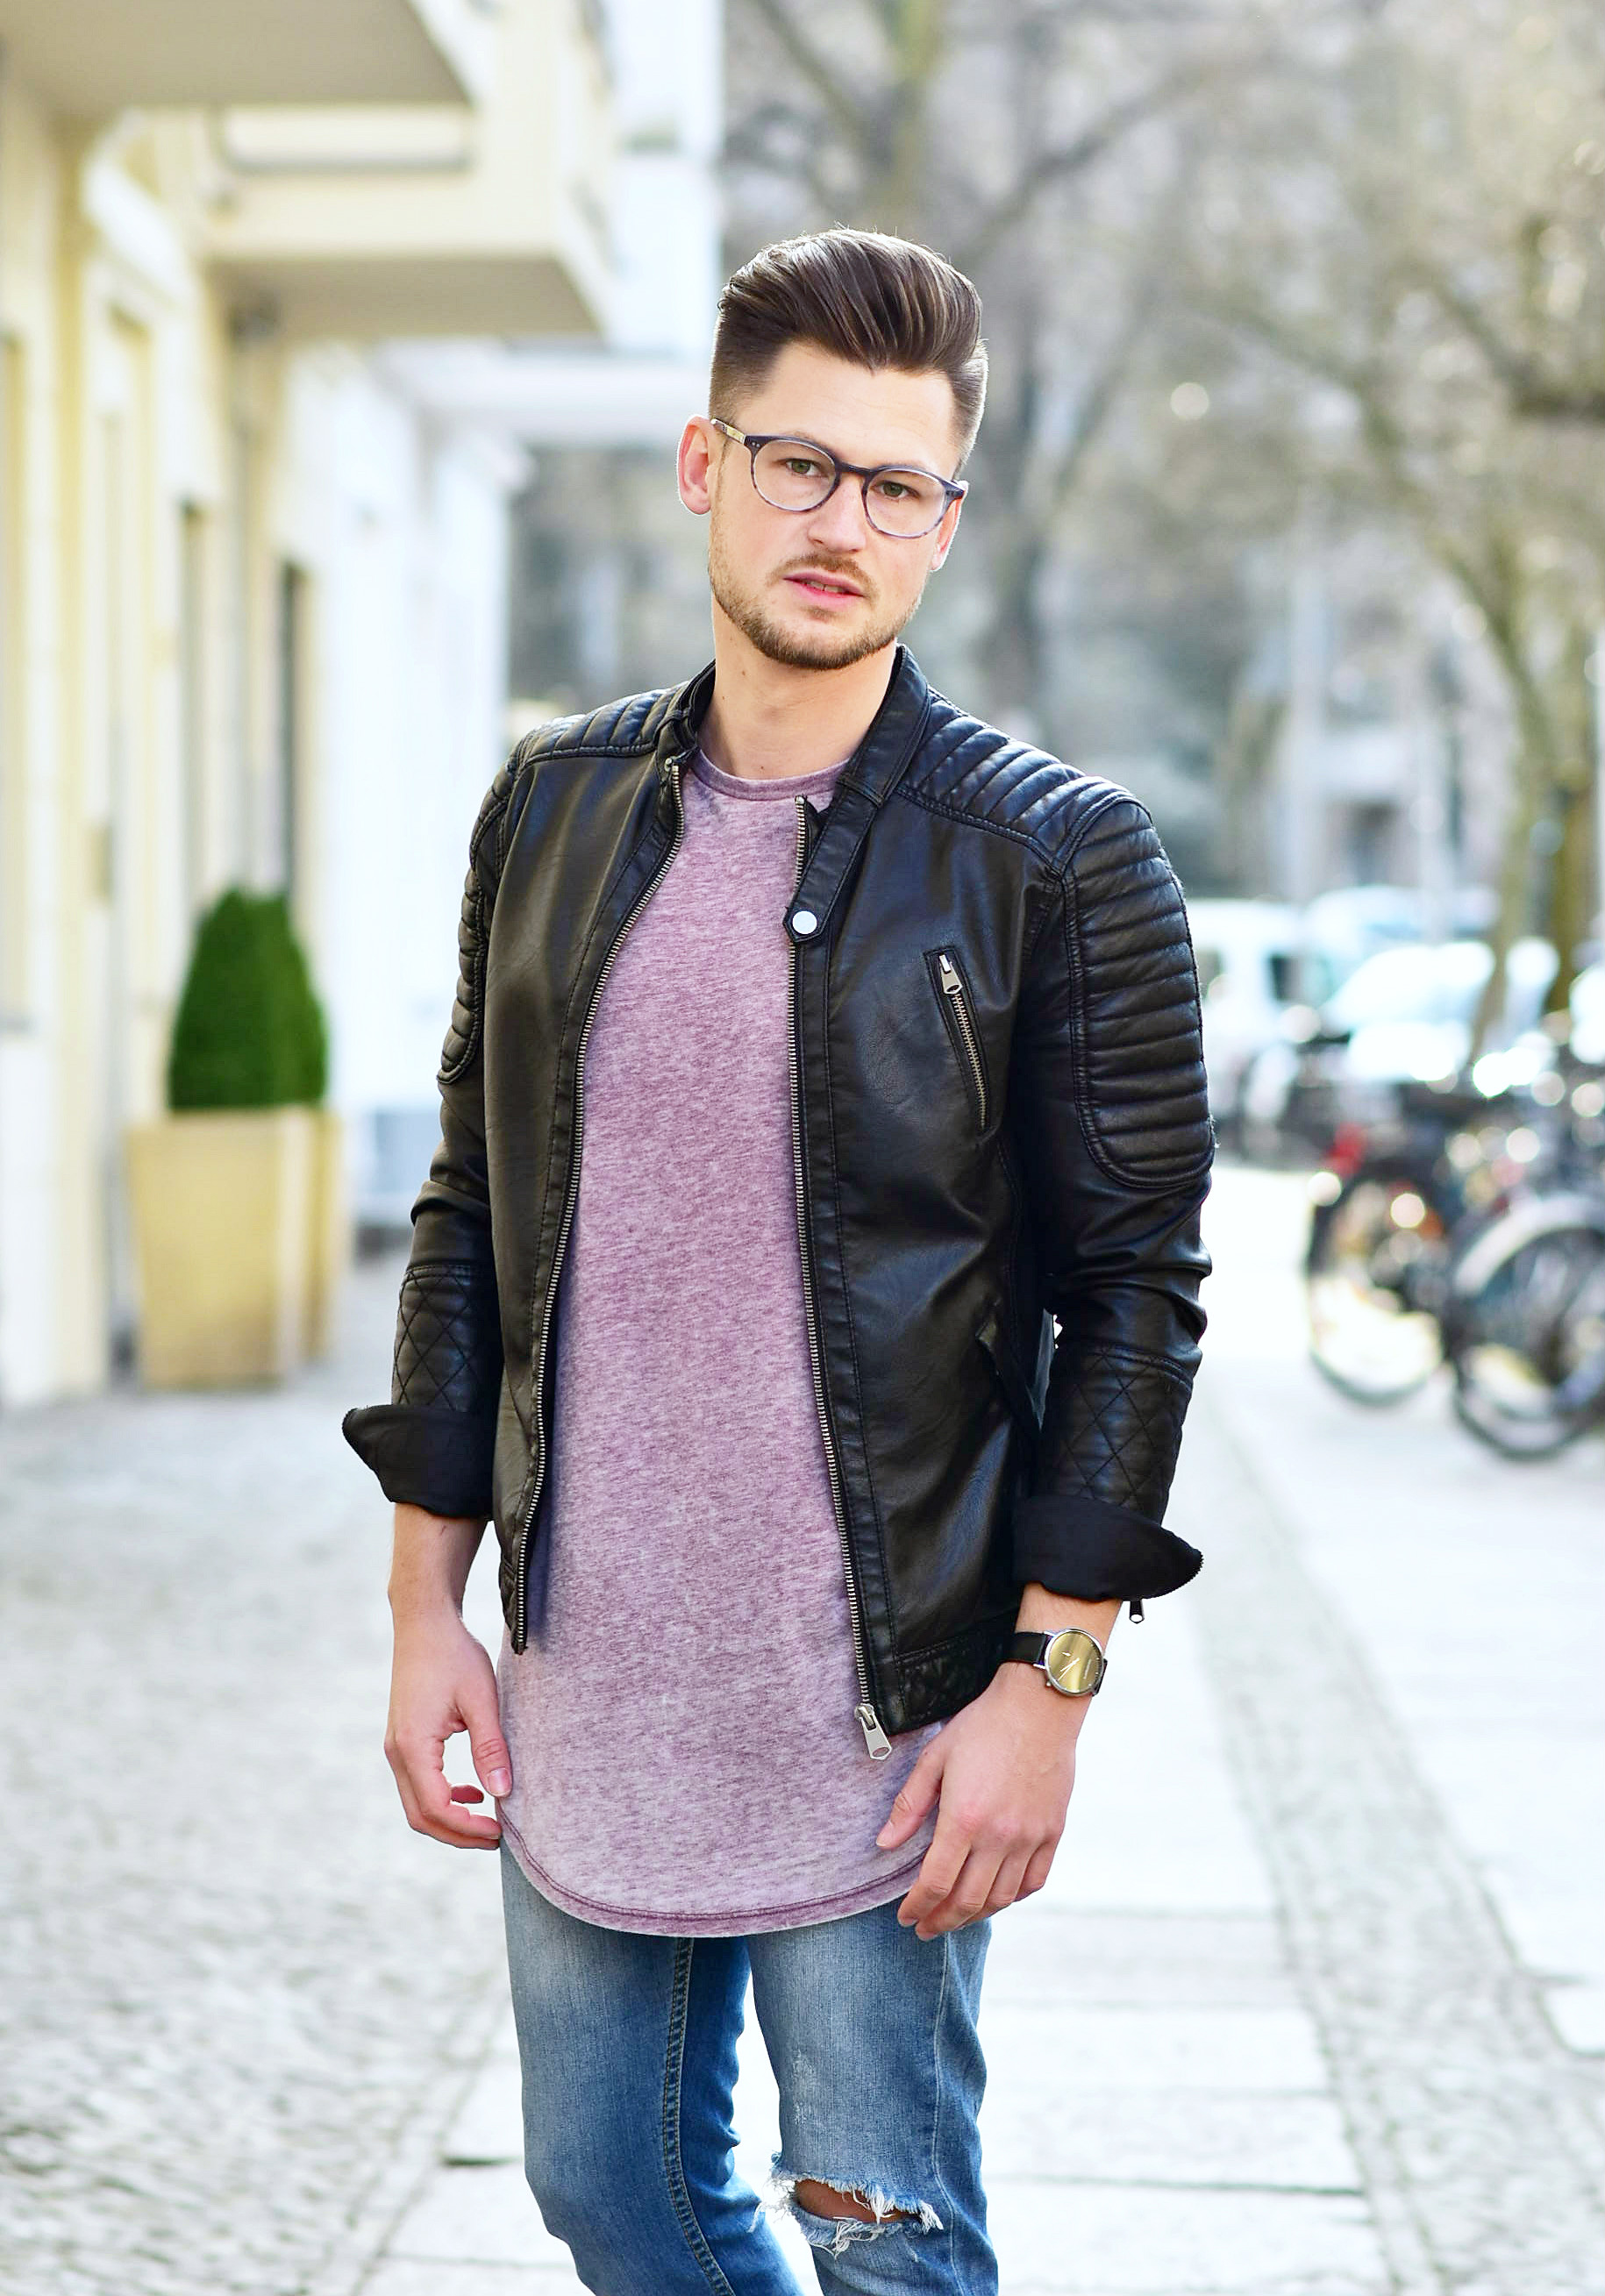 Tommeezjerry-Styleblog-Männerblog-Modeblog-Berlin-Outfit-Casual-Streetlook-Ripped-Jeans-Lederjacke-Bikerjacke-Weiße-Sneaker